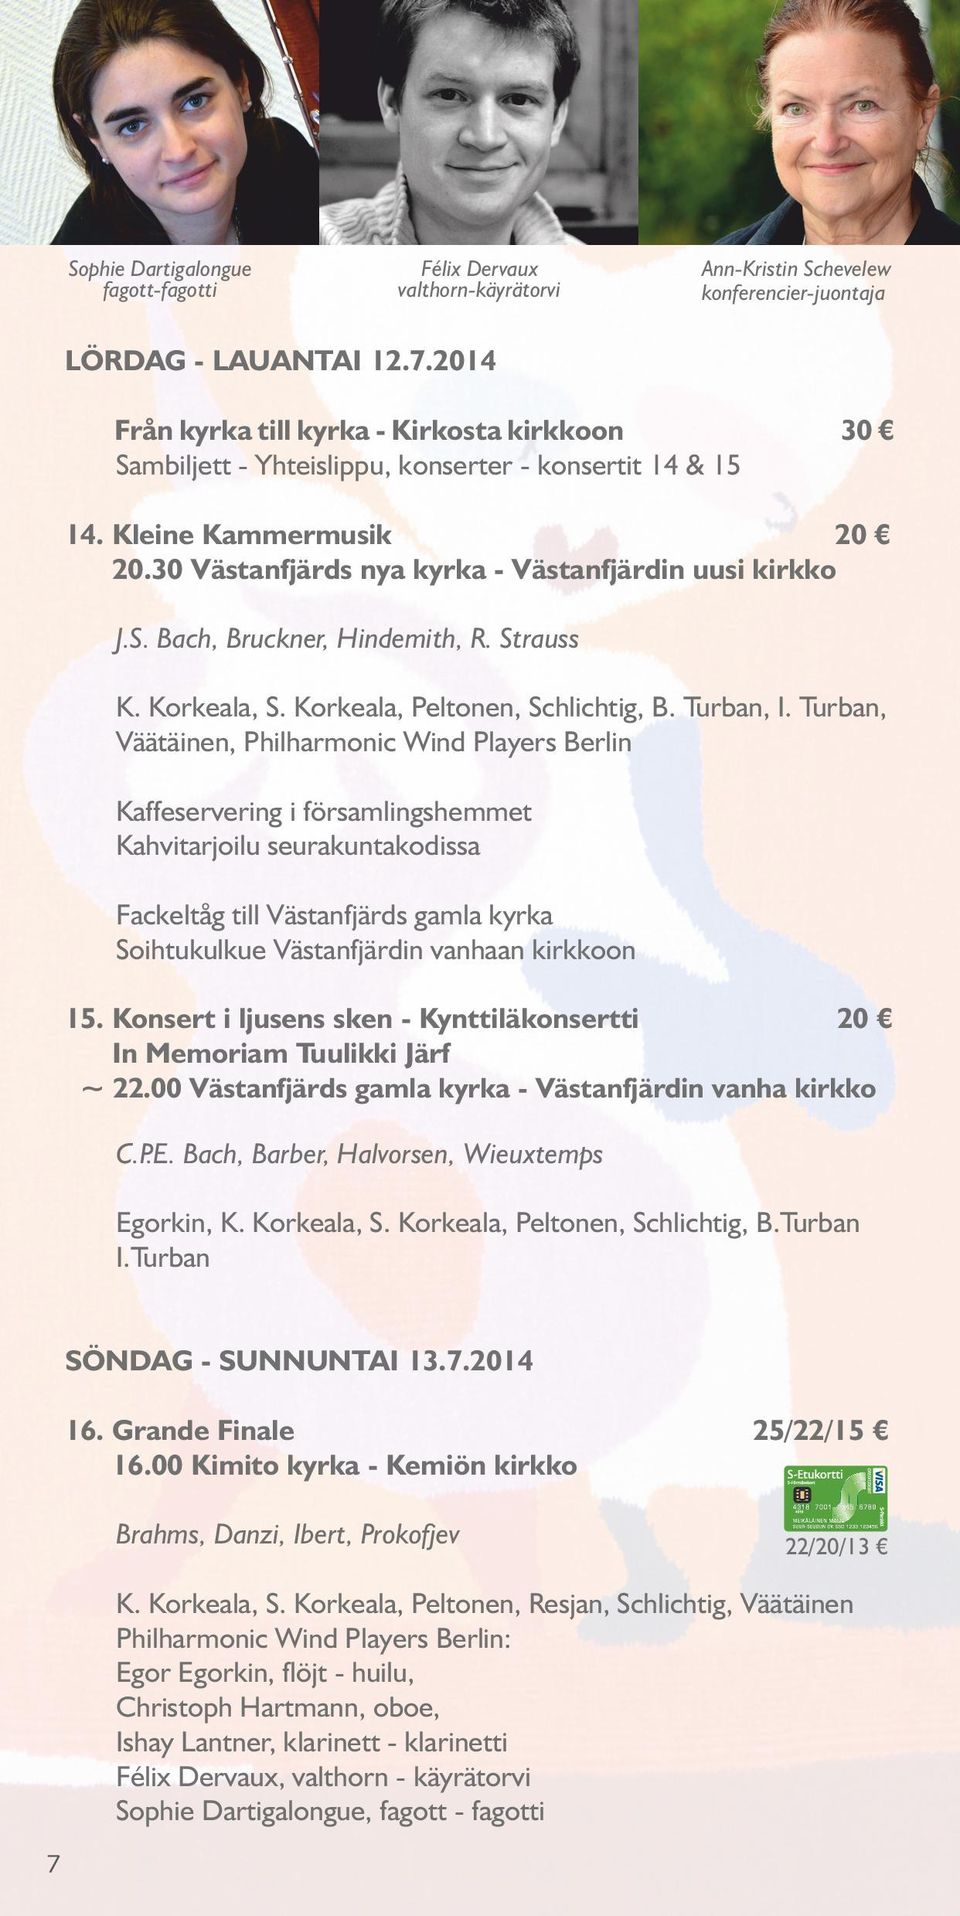 Strauss K. Korkeala, S. Korkeala, Peltonen, Schlichtig, B. Turban, I.